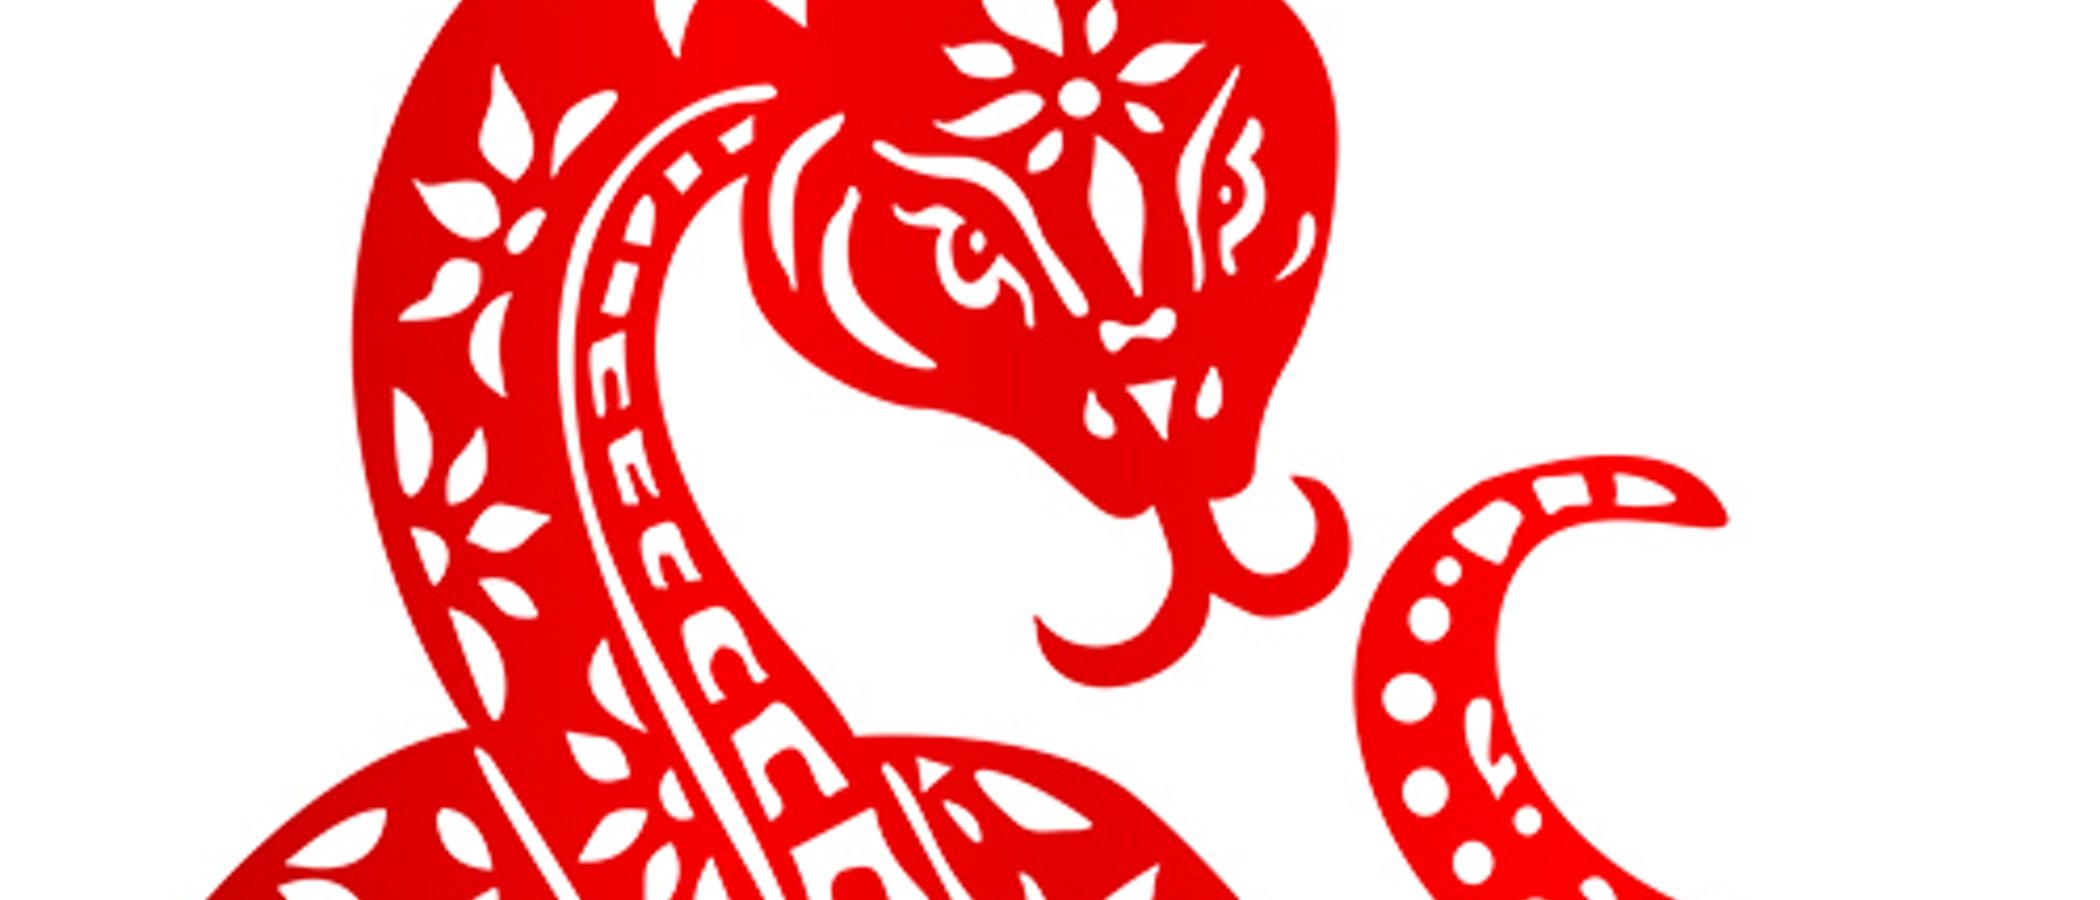 Horóscopo chino 2019: Serpiente